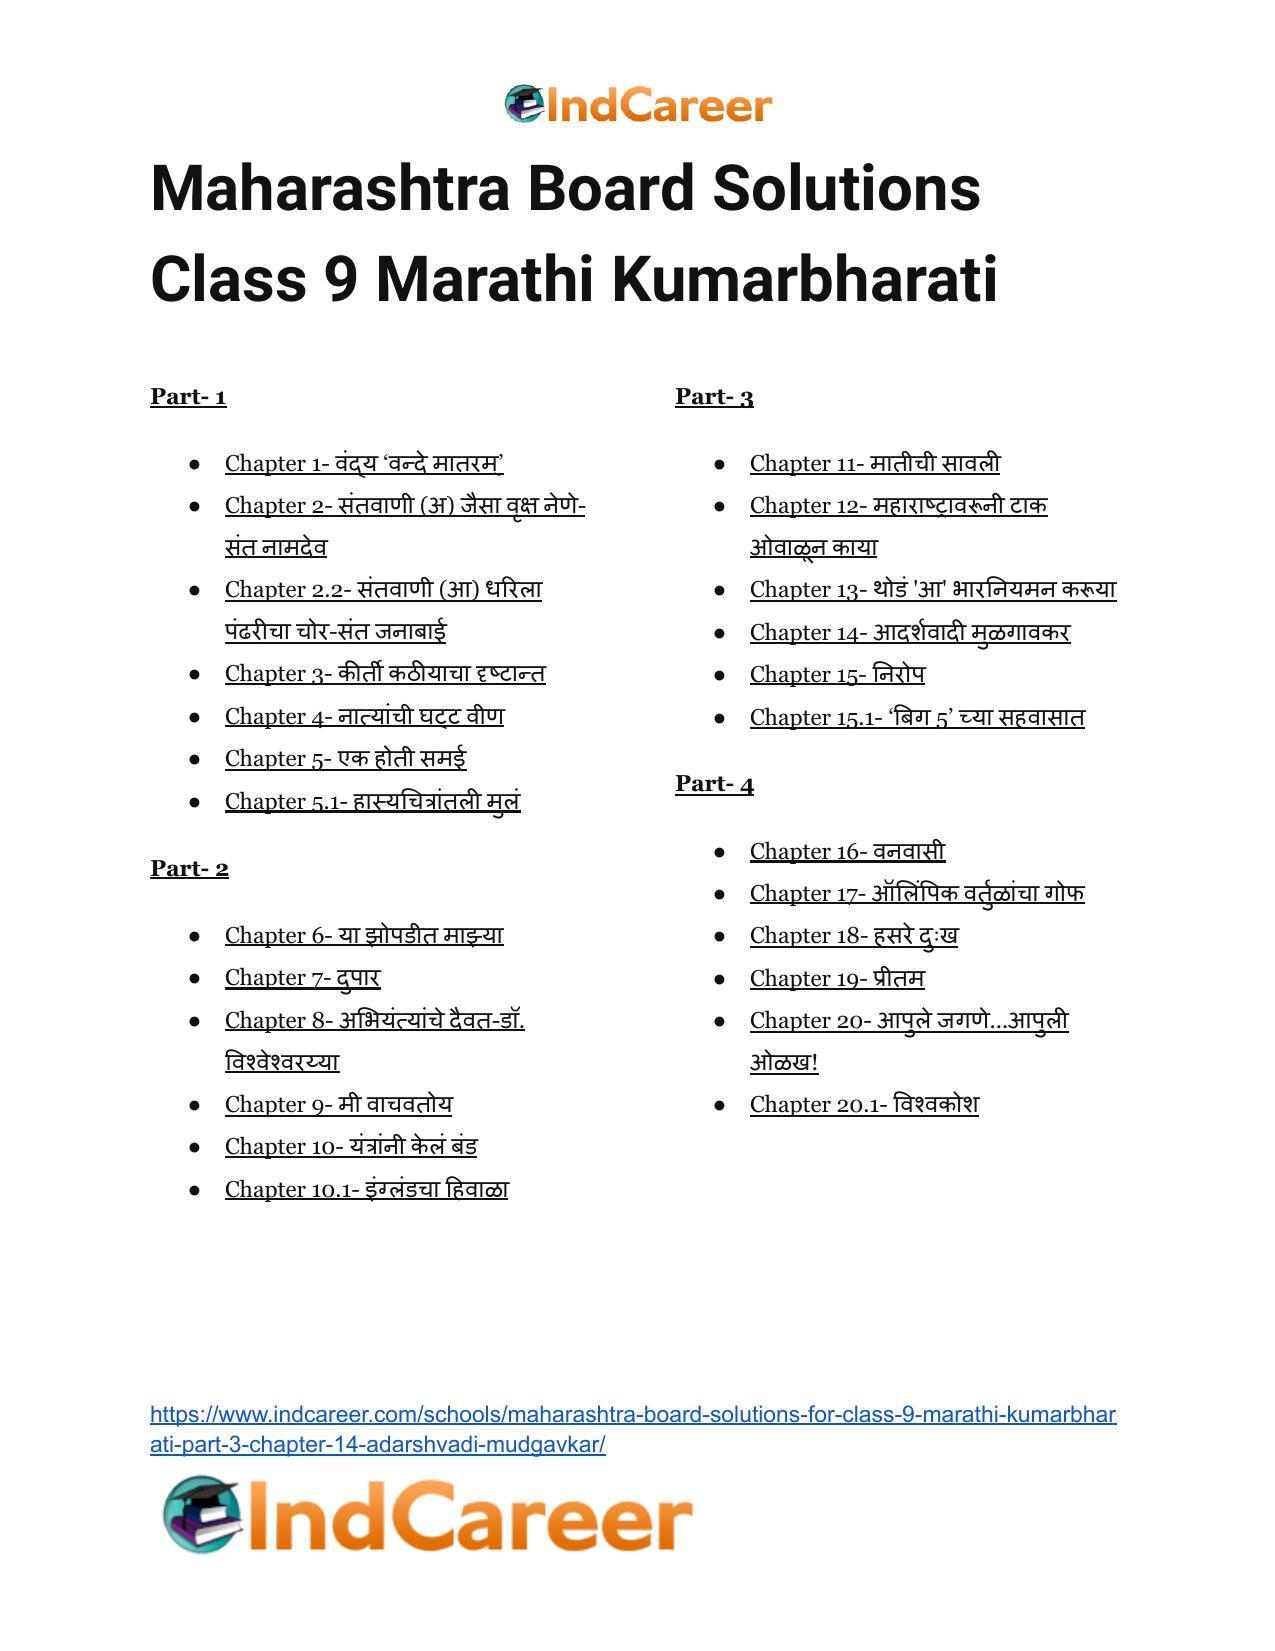 Maharashtra Board Solutions for Class 9- Marathi Kumarbharati (Part- 3): Chapter 14- आदर्शवादी मुळगावकर - Page 26